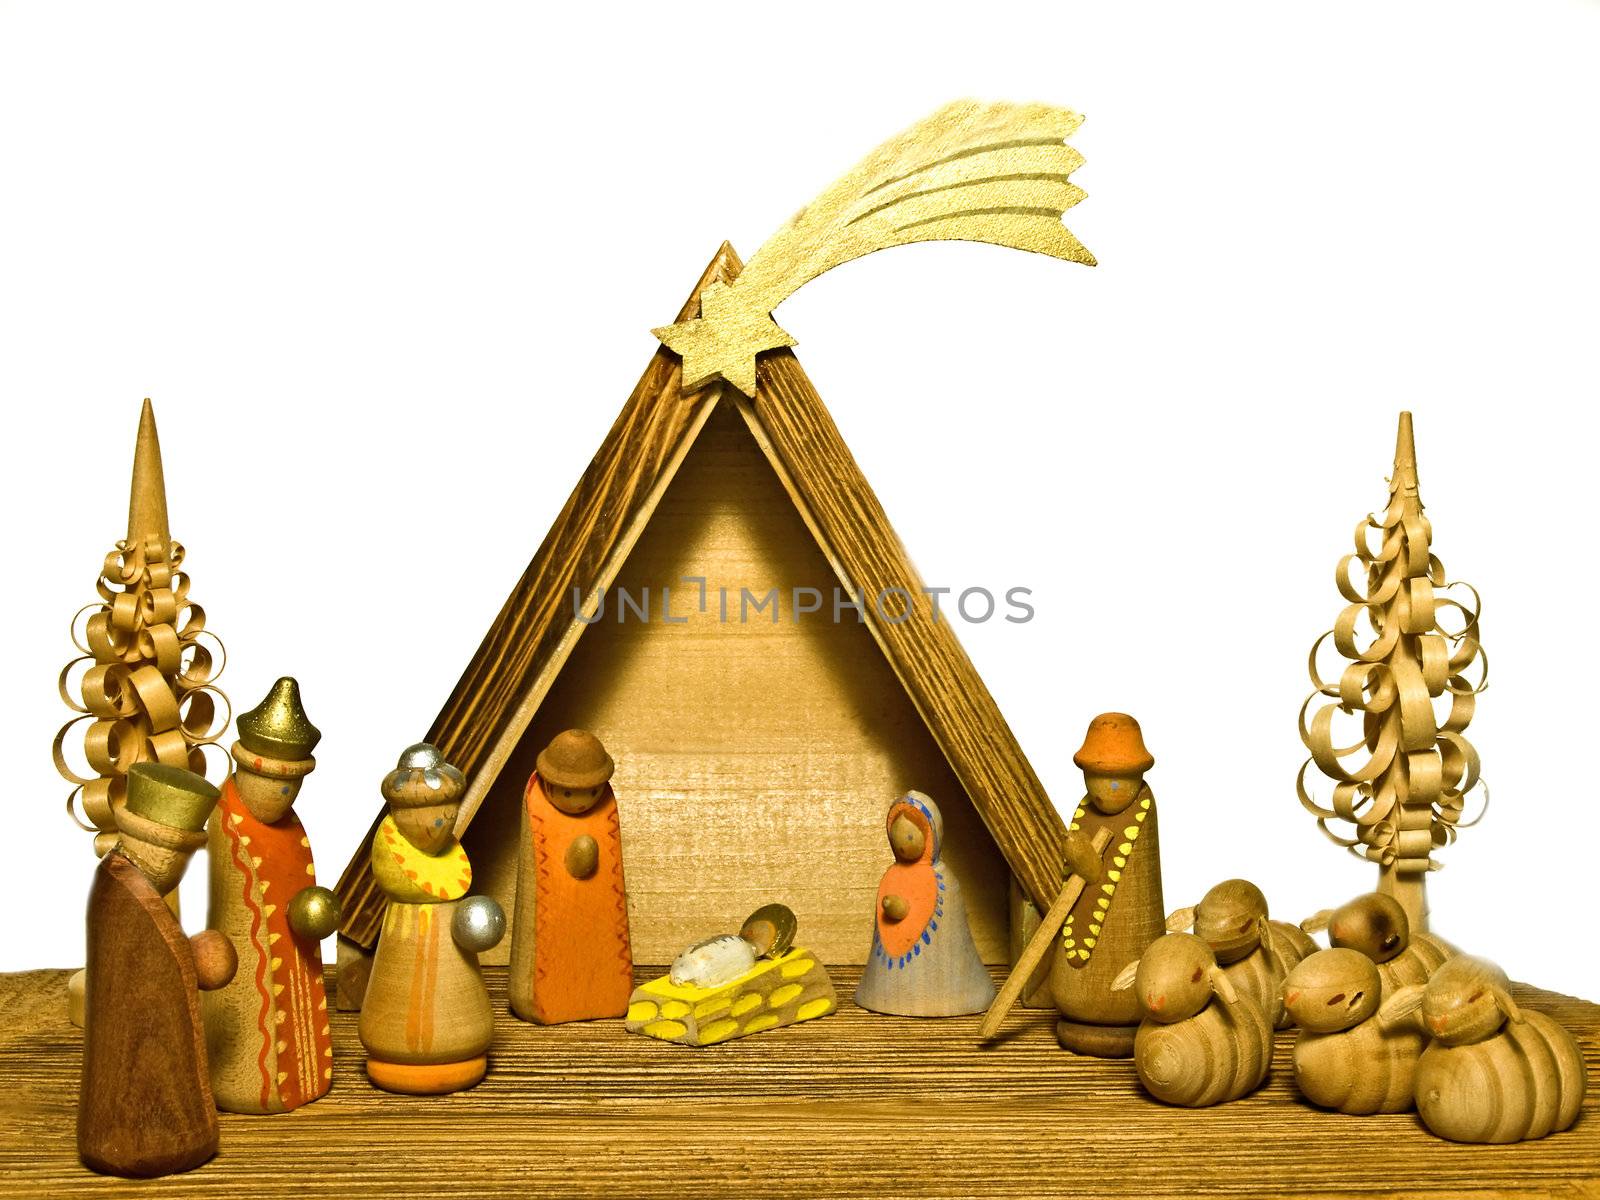 nativity scene by Jochen